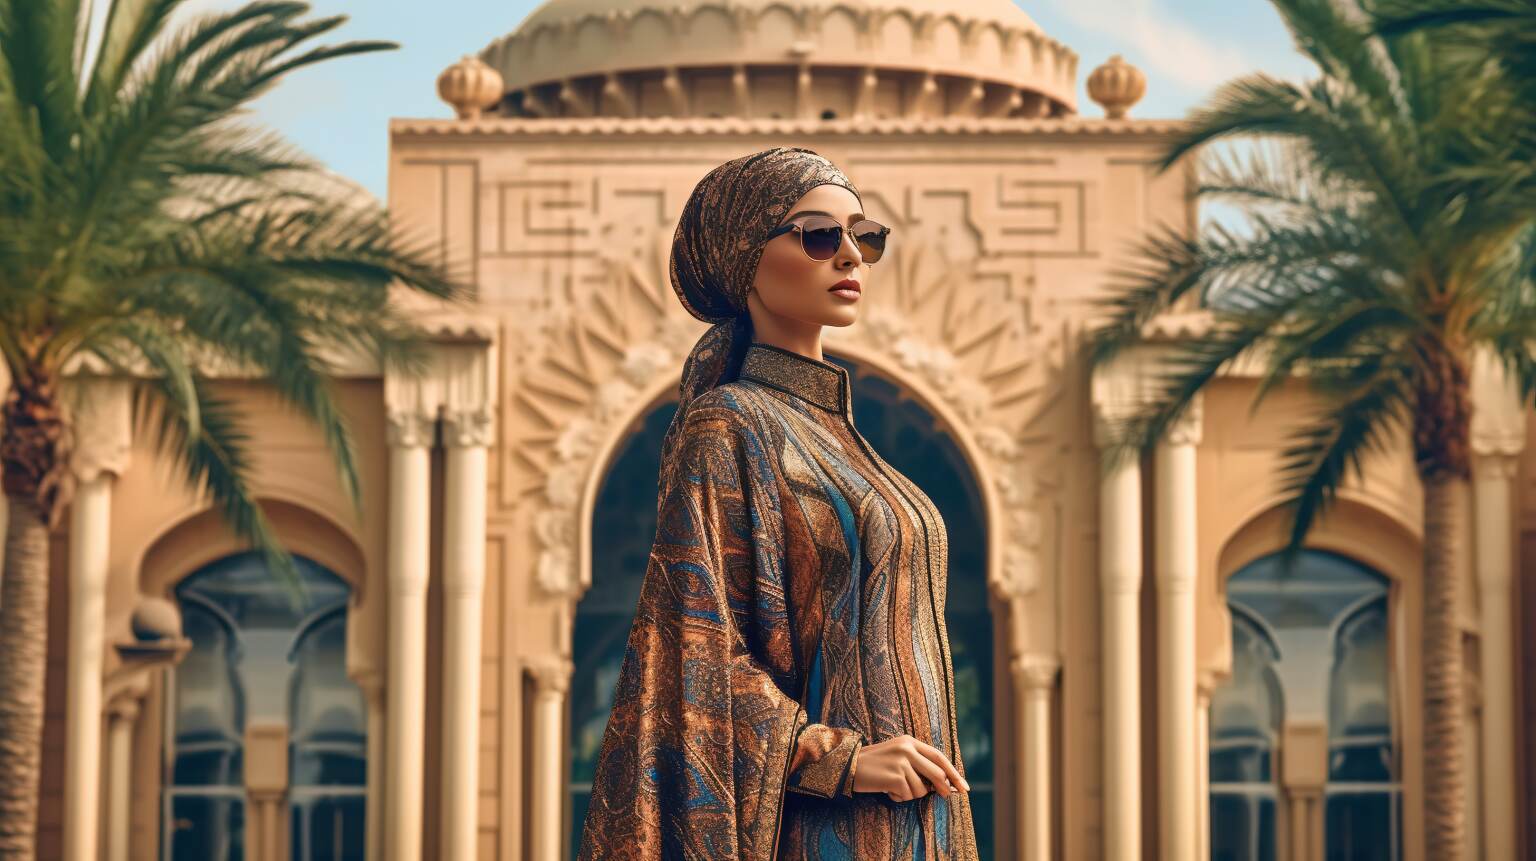 woman wearing a modest but elegant abaya upscale